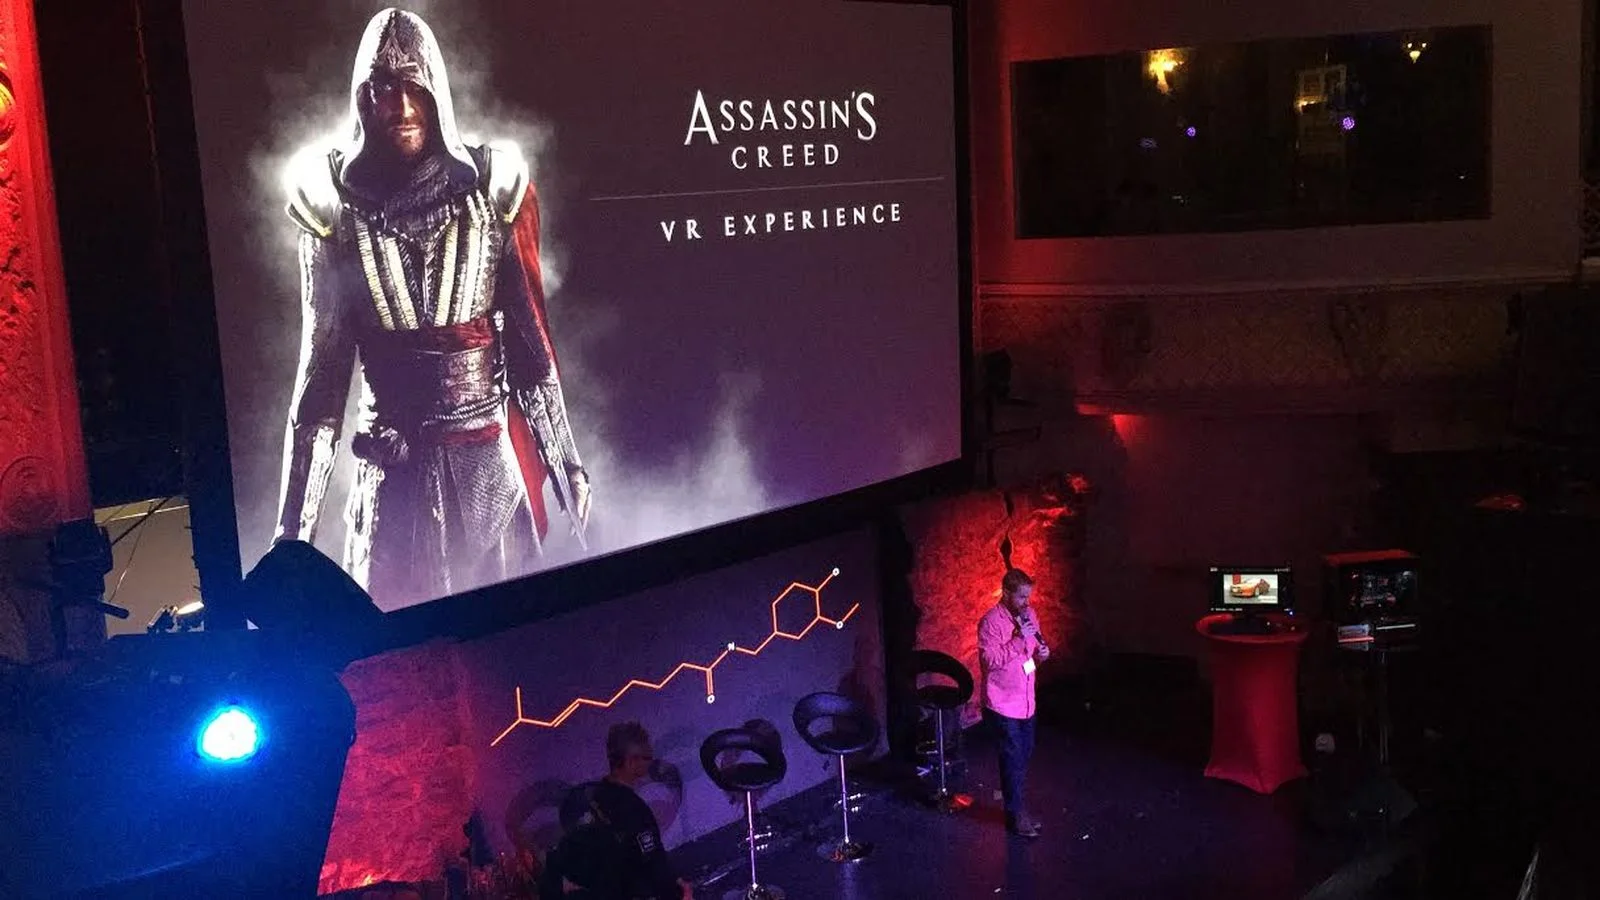 По Assassin's Creed делают VR-проект - фото 1